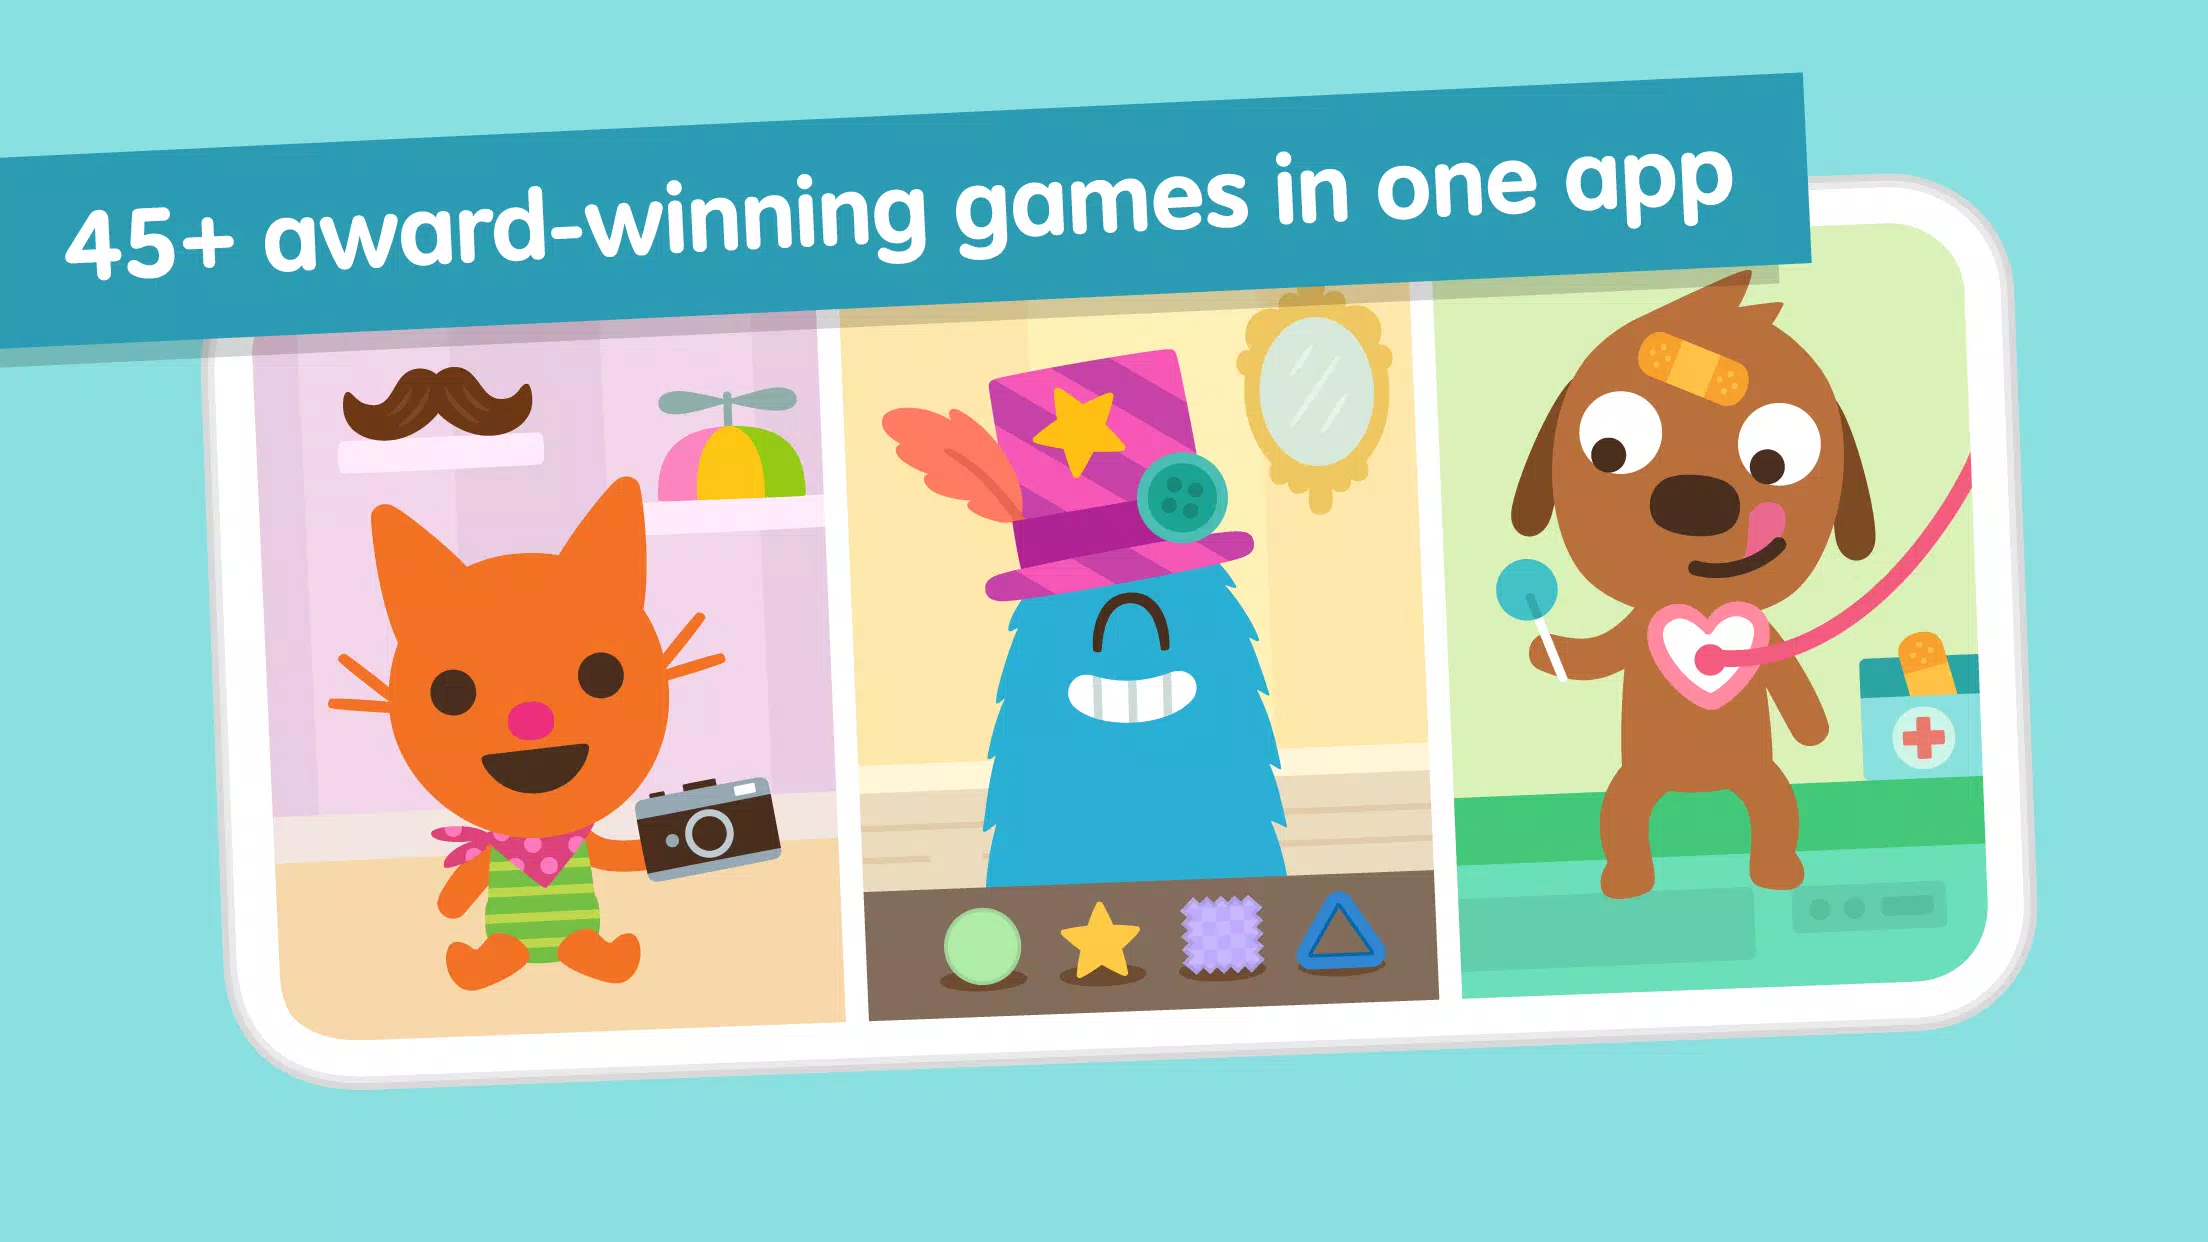 Sago Mini World: Kids Games (MOD, Unlocked All) v4.8 APK Download 